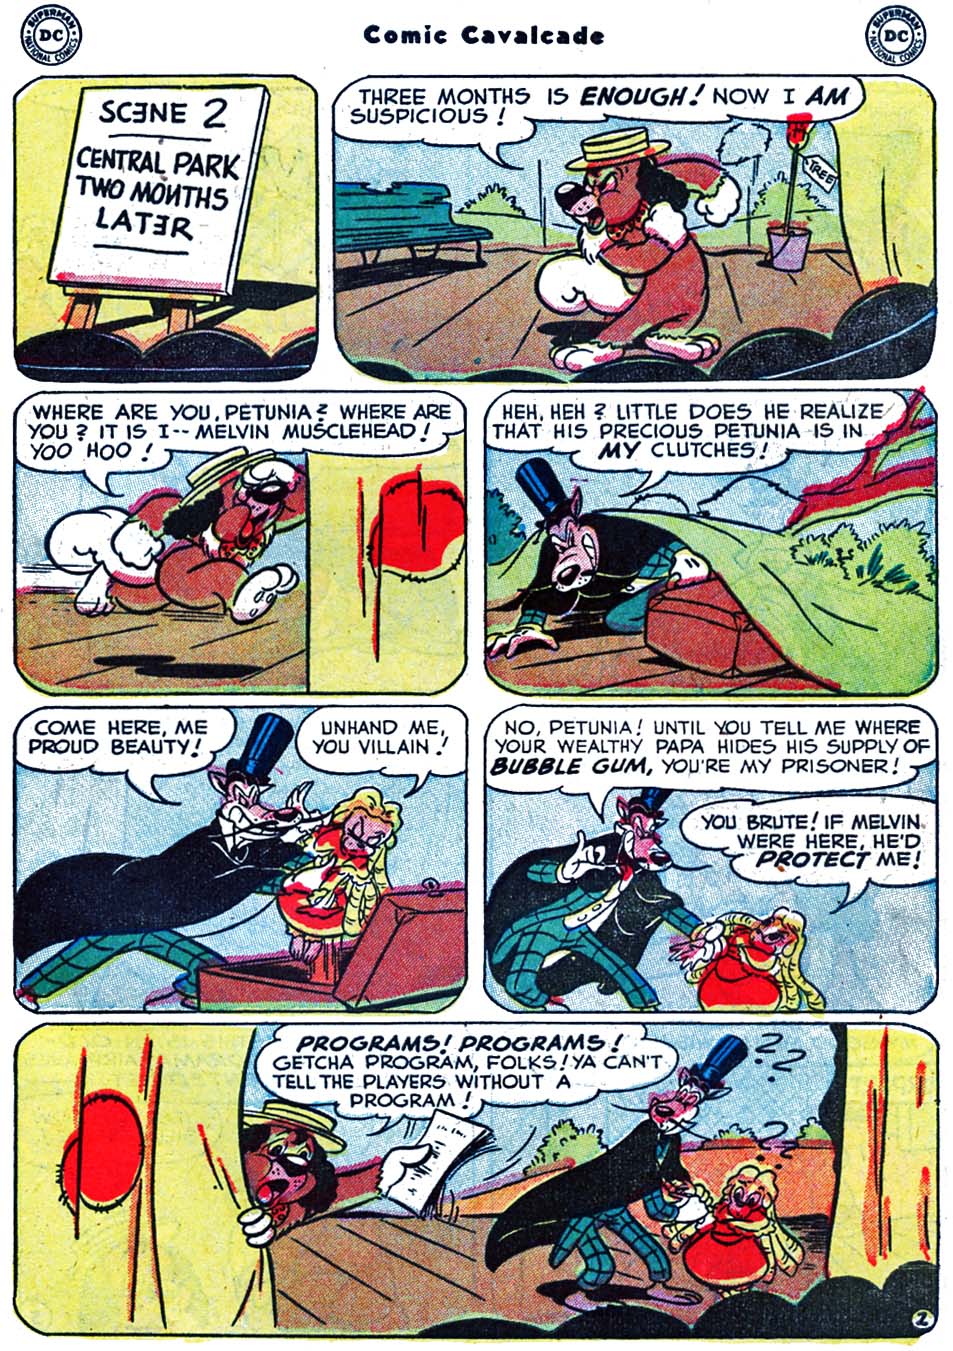 Comic Cavalcade issue 51 - Page 53